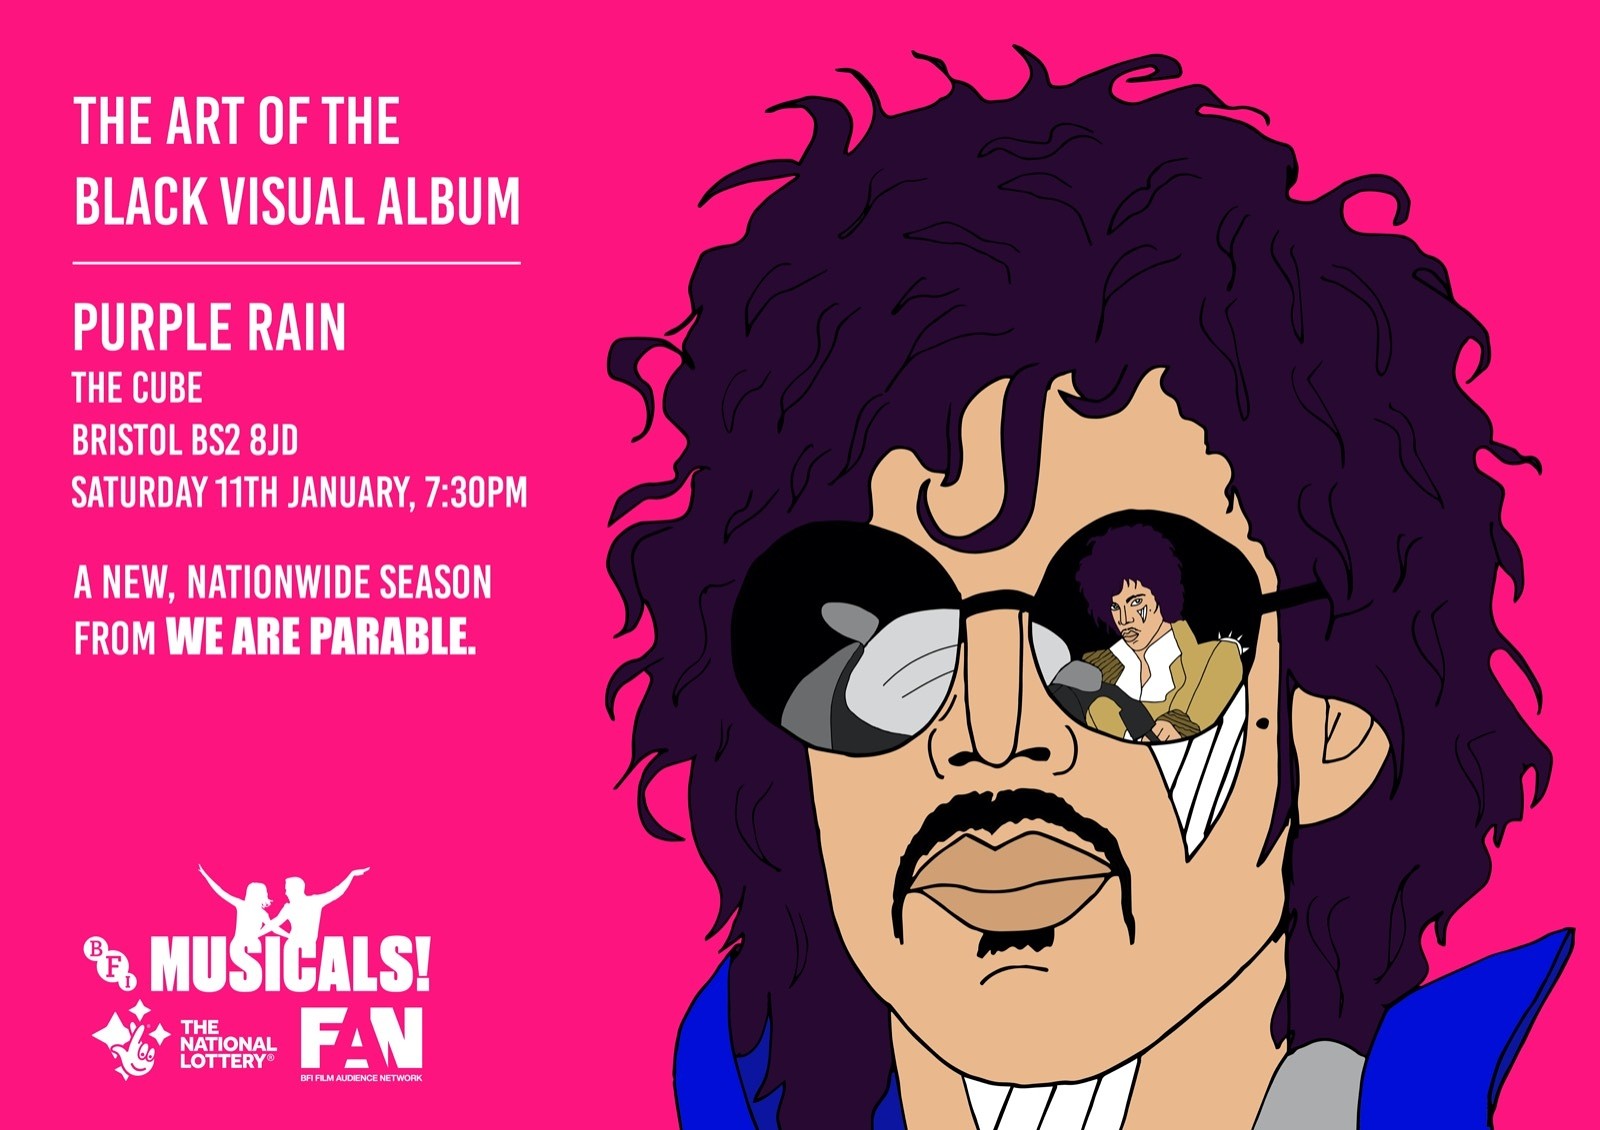 Prince's film "Purple Rain" at The Cube